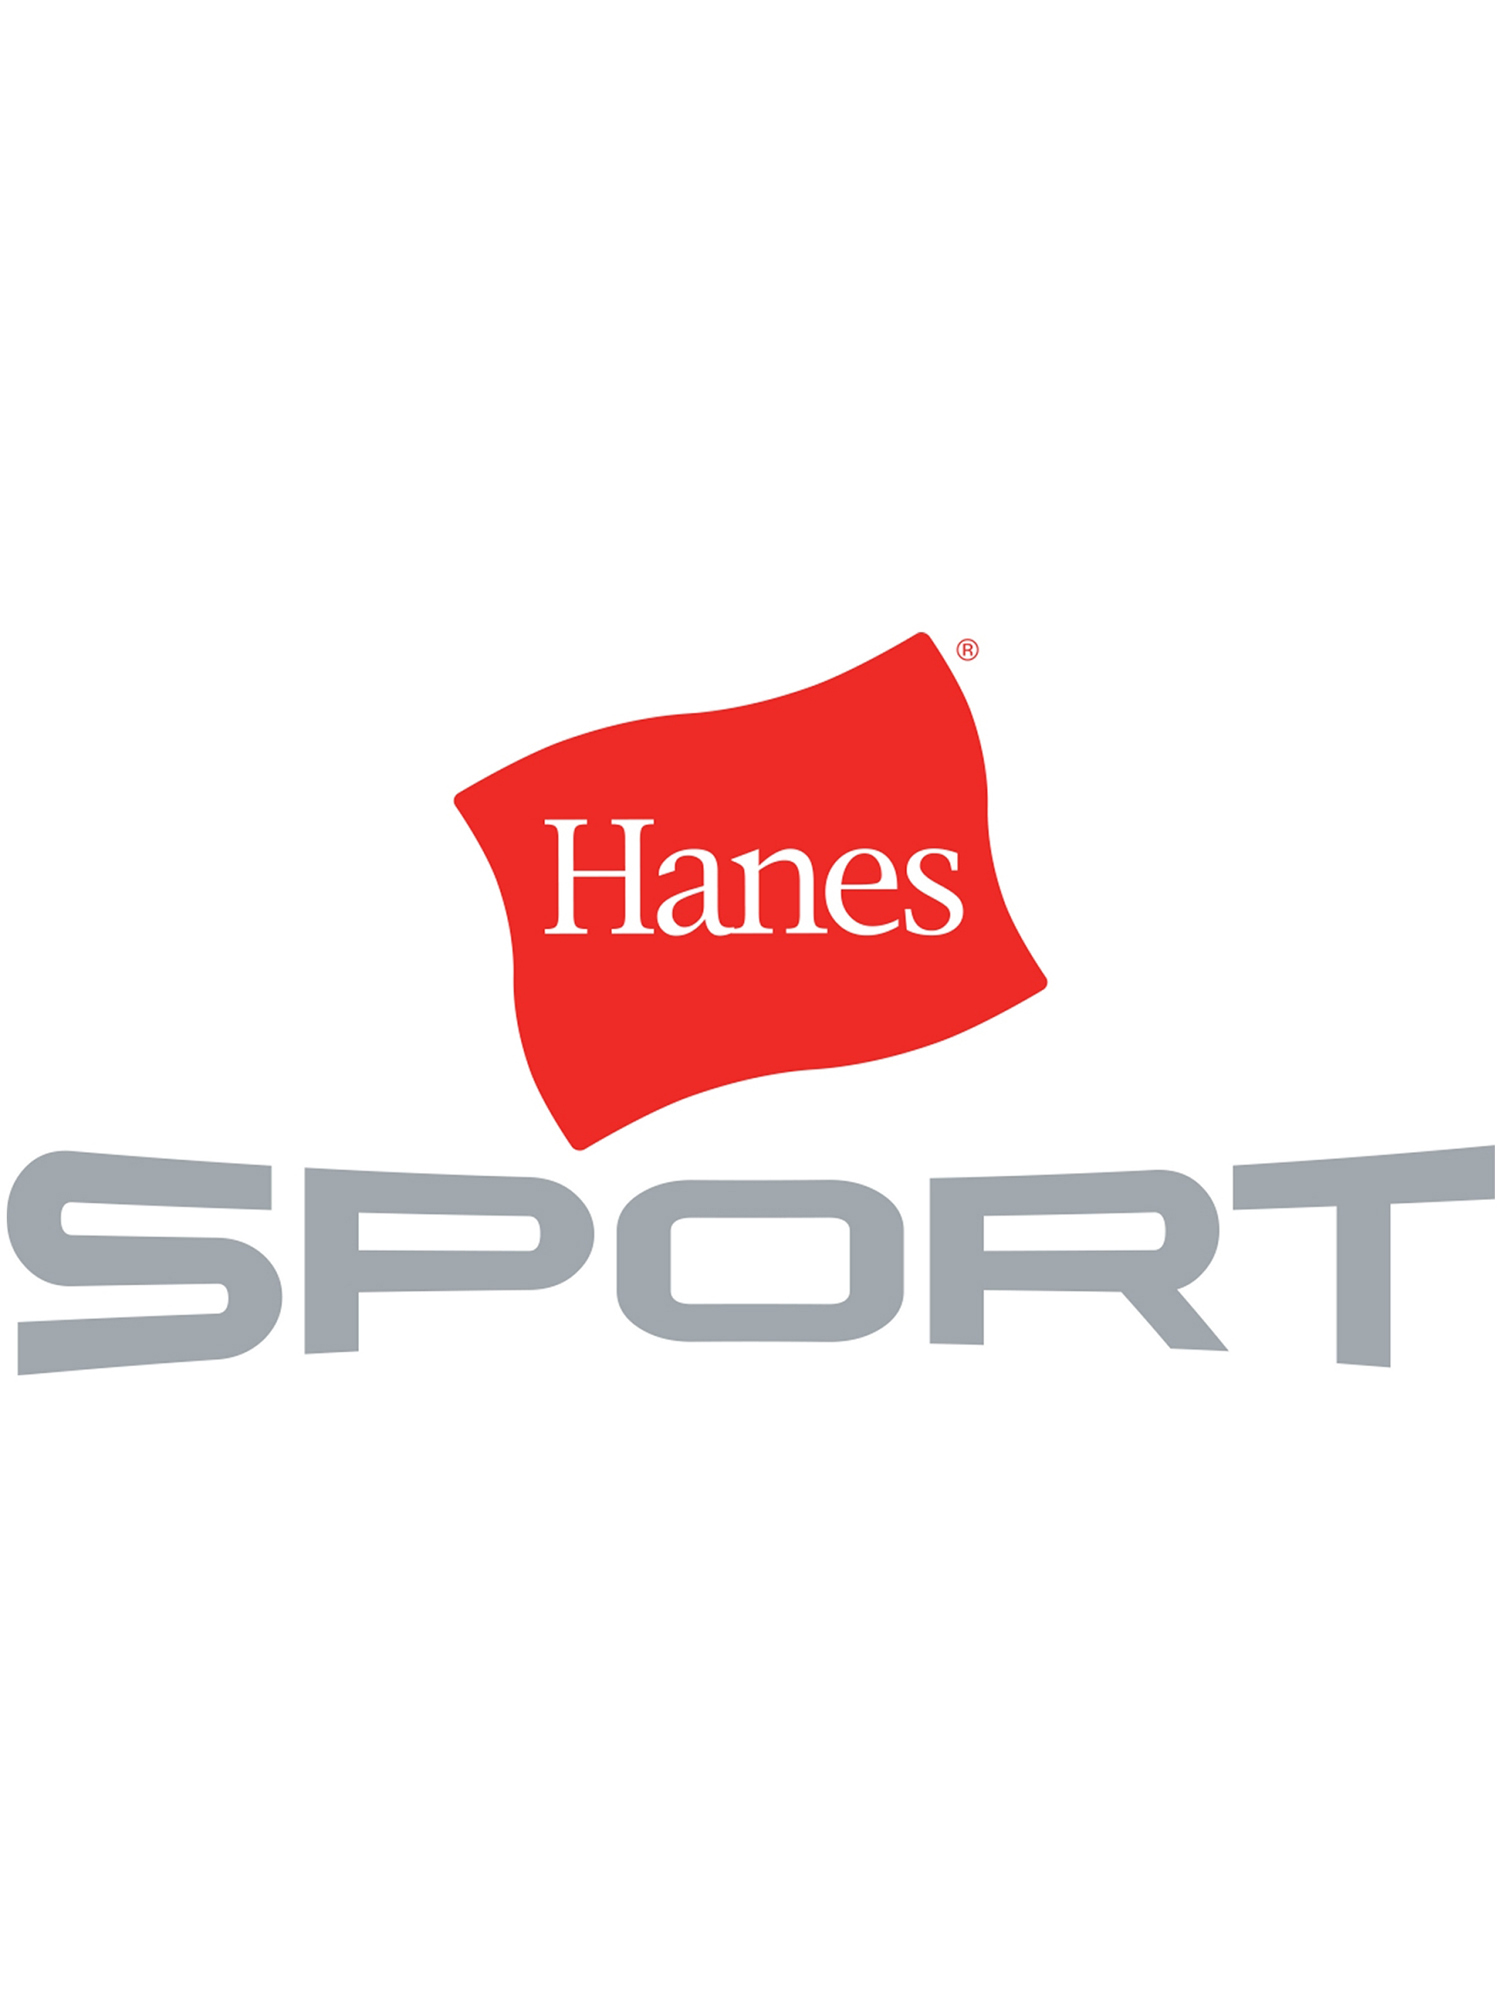 Hanes Sport Women's Performance Stretch Tank - image 4 of 5